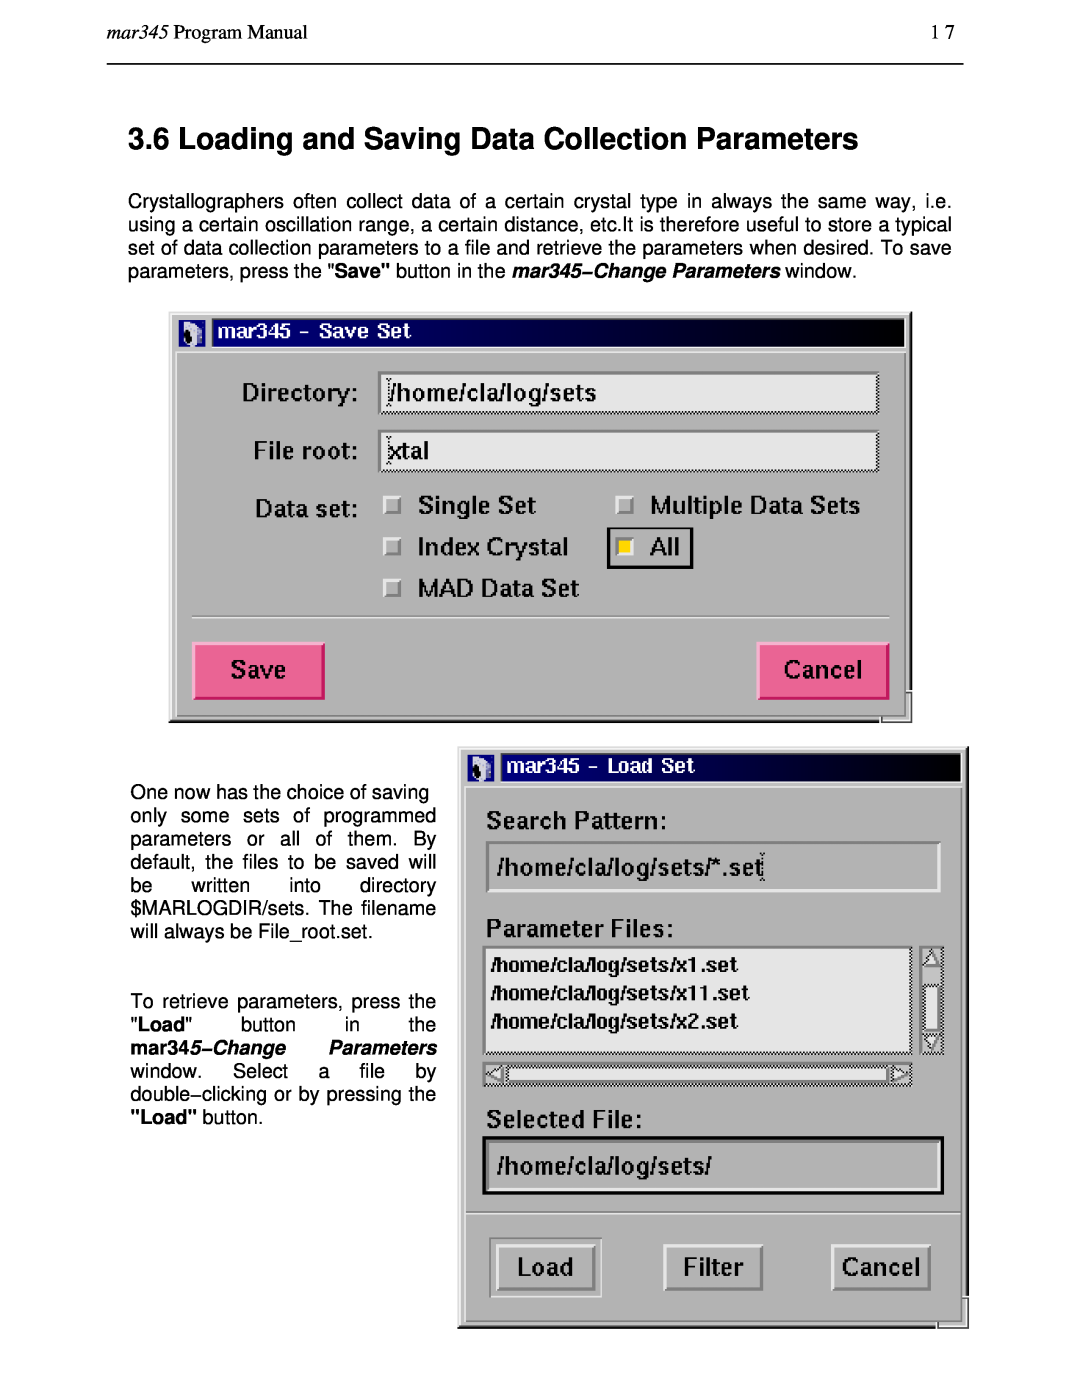 Compaq manual Loading and Saving Data Collection Parameters, mar345 Program Manual 